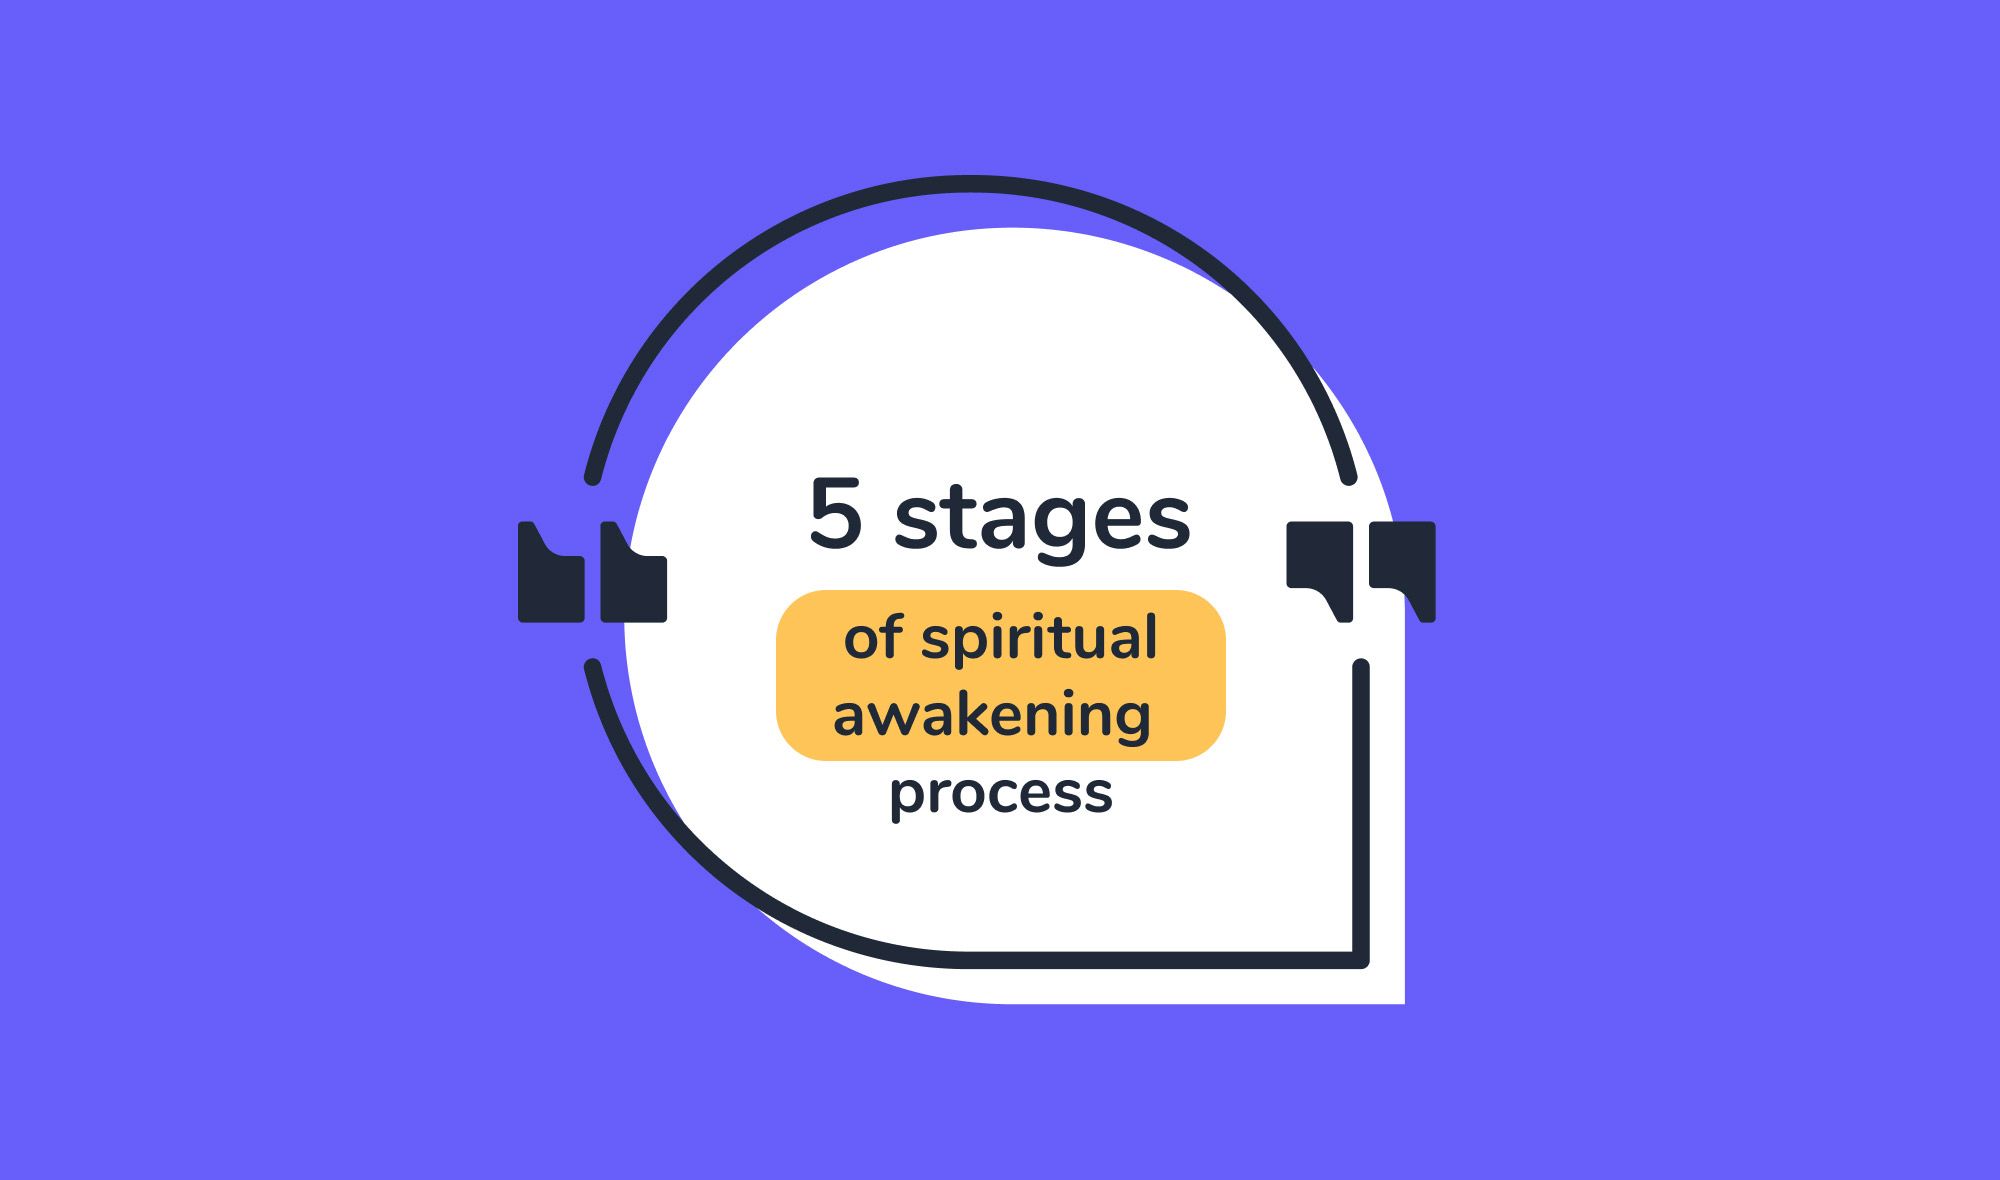 Here's what happens during the spiritual awakening process